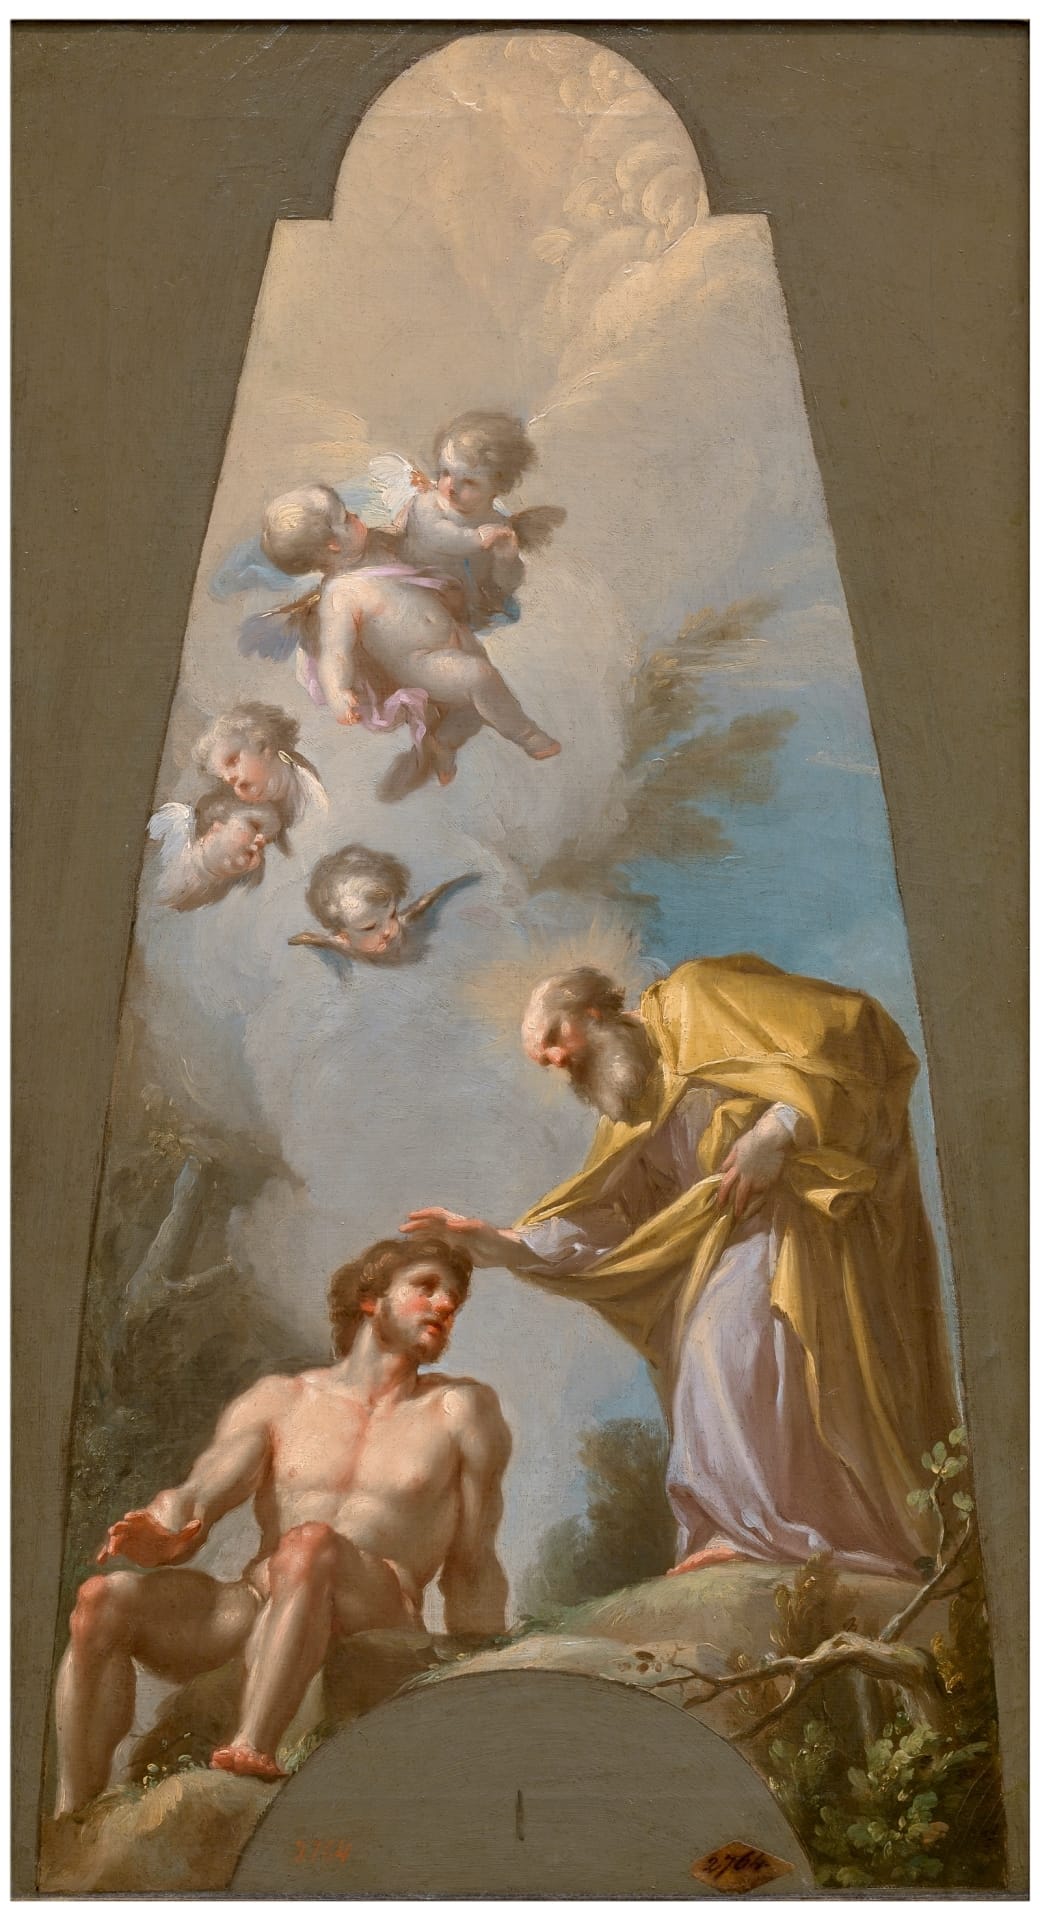 The Creation of Adam (1771) by Bayeu, Francisco - Public Domain Catholic Painting